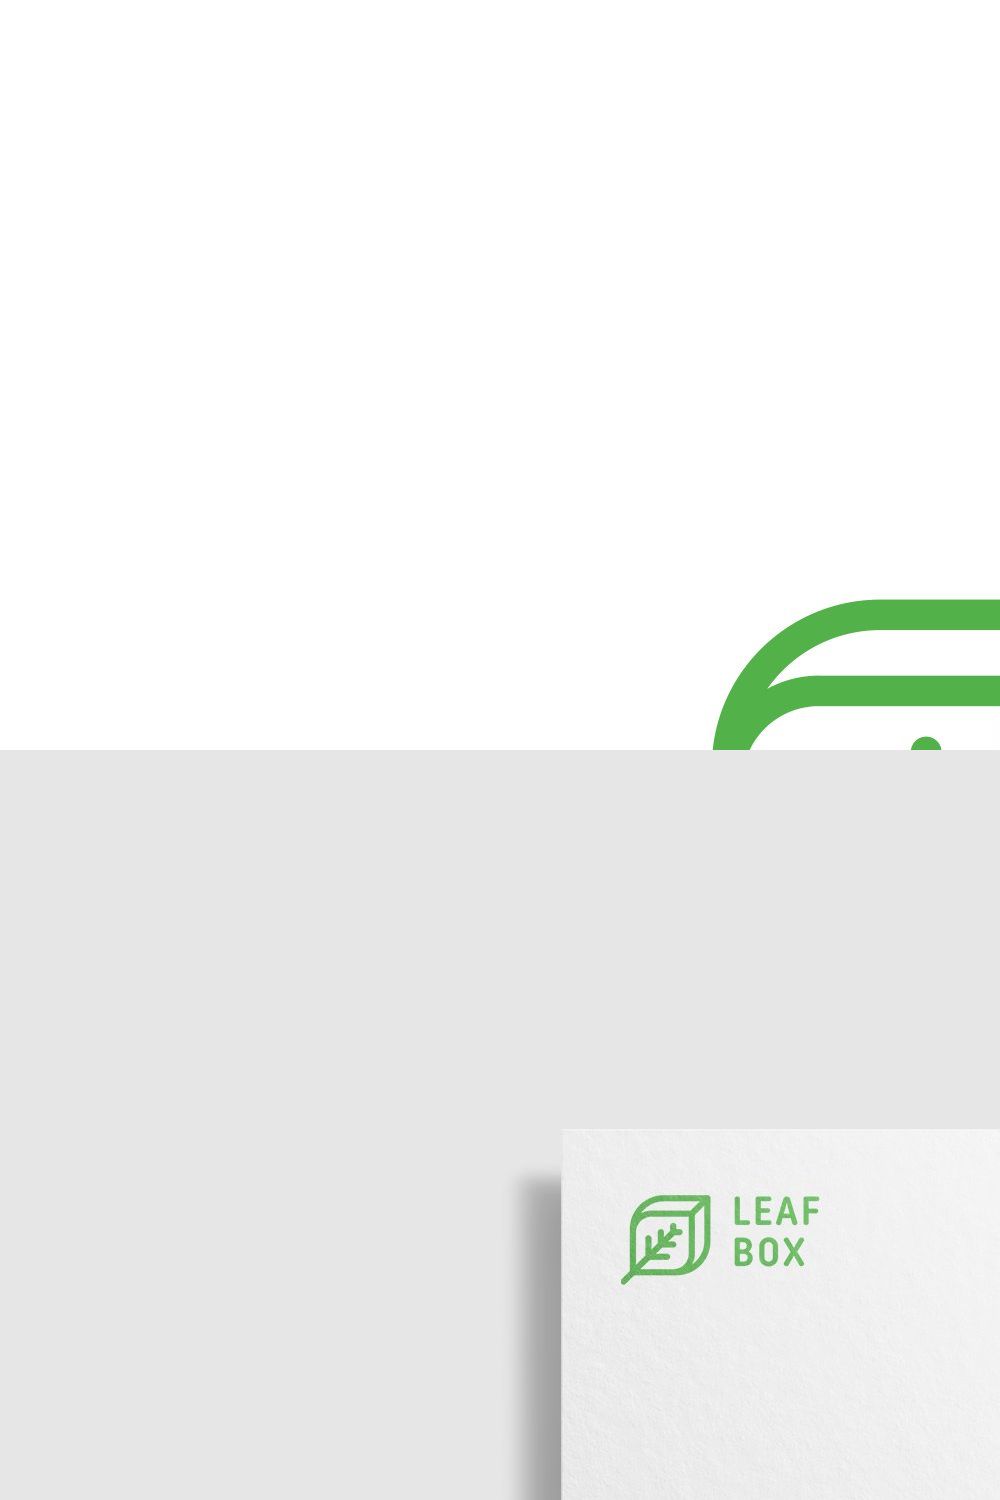 Leaf Box Logo pinterest preview image.